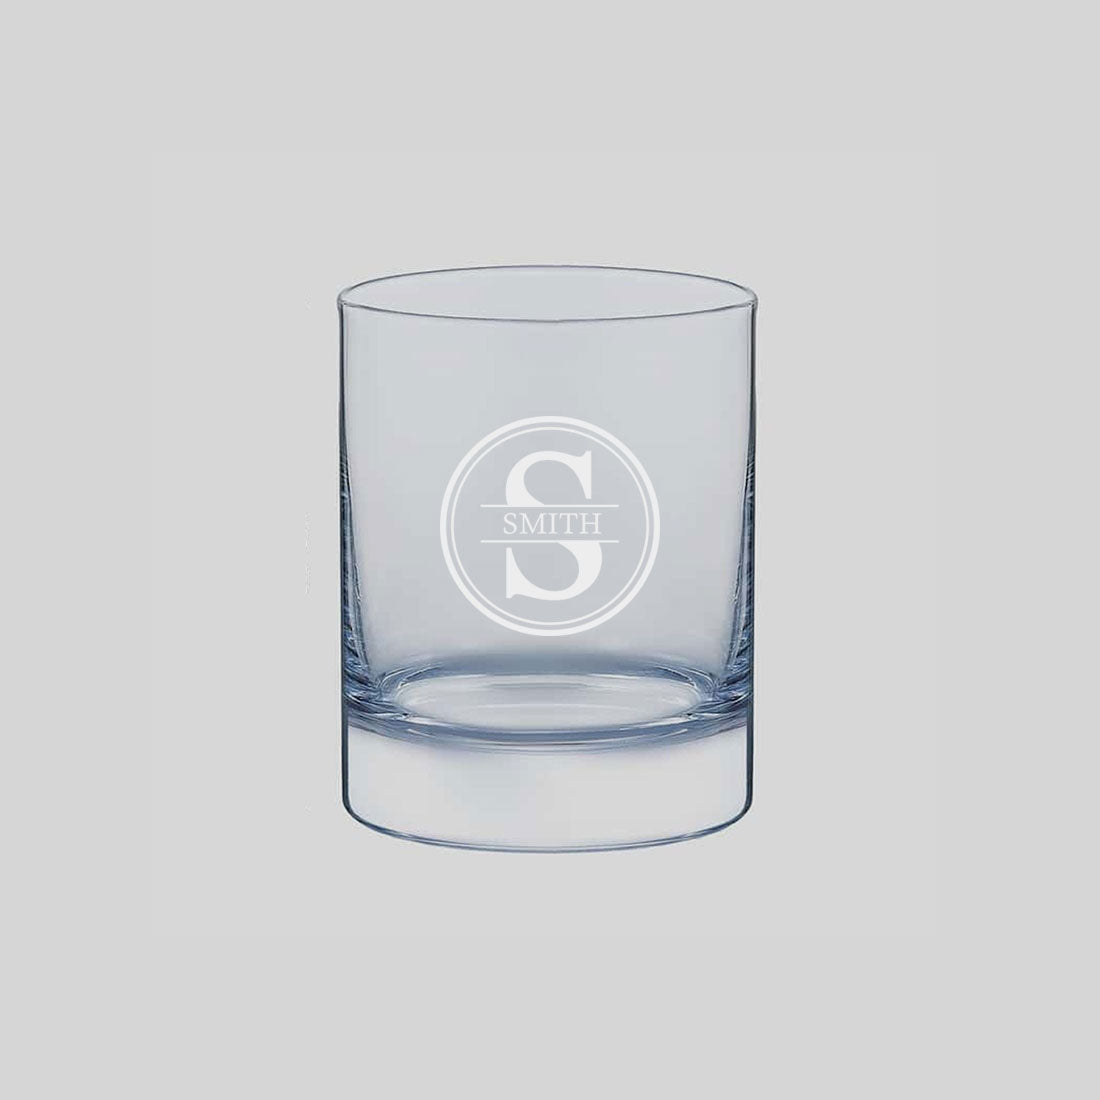 Wonderful Personalized Whiskey Glass - Gift For Him Husband Boyfriend - Add Name